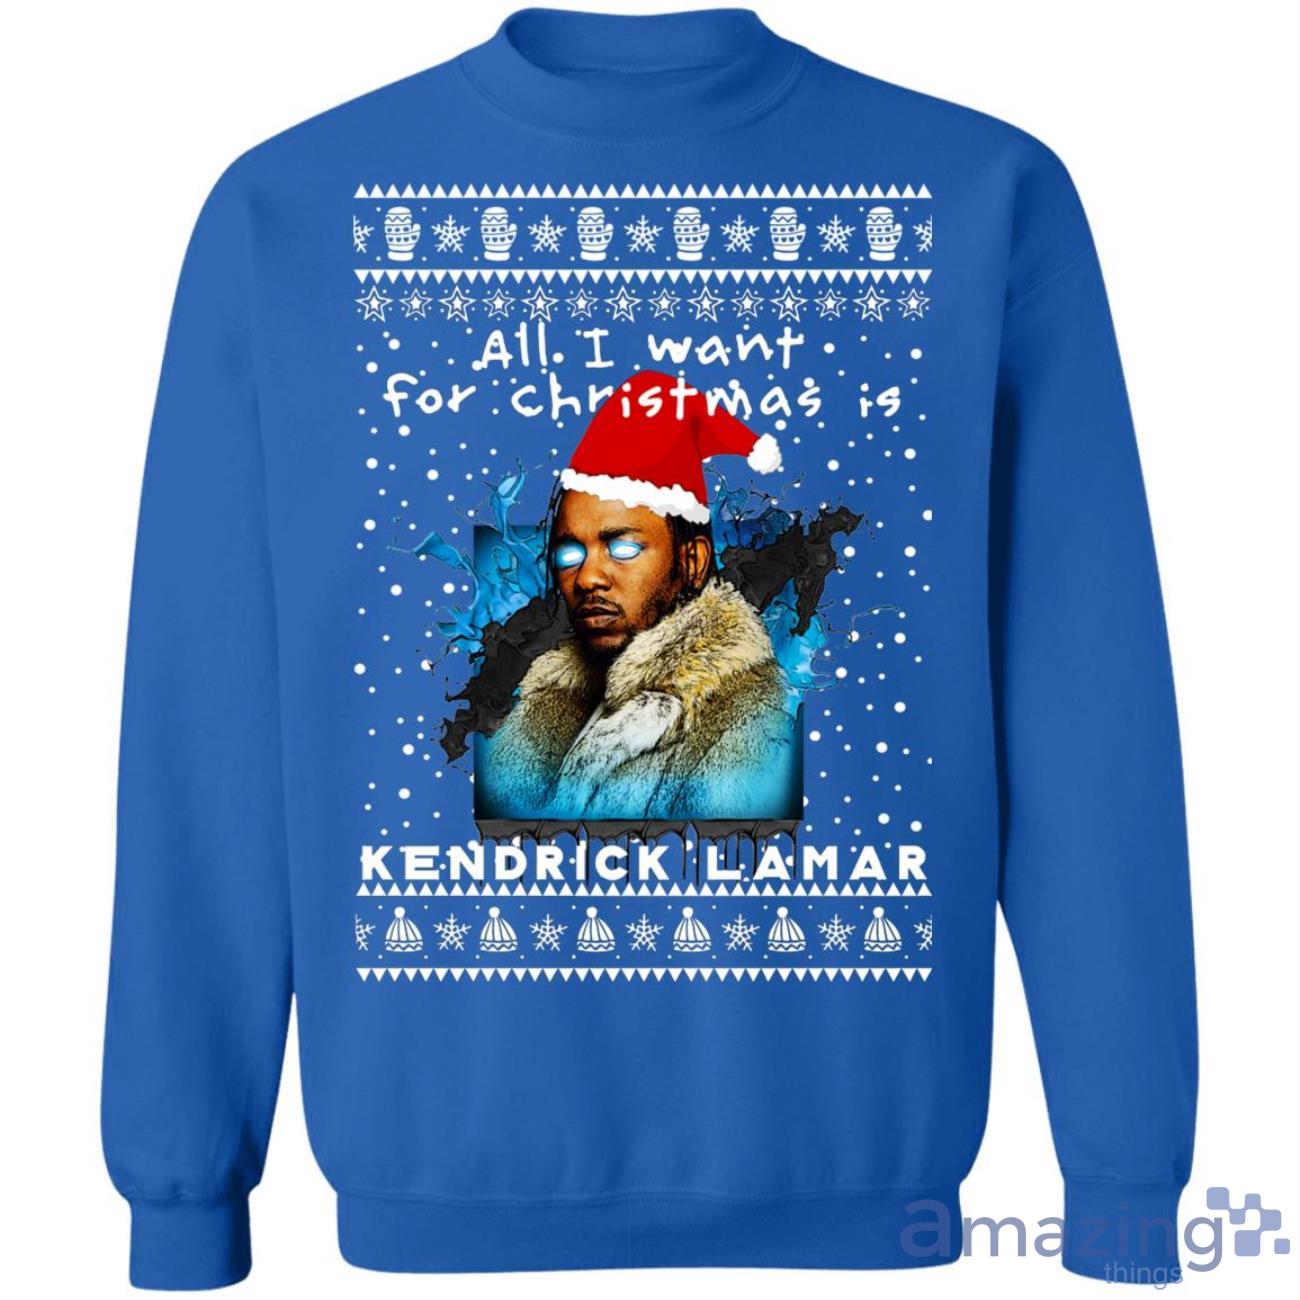 Kendrick Lamar Rapper Christmas Sweatshirt Product Photo 1